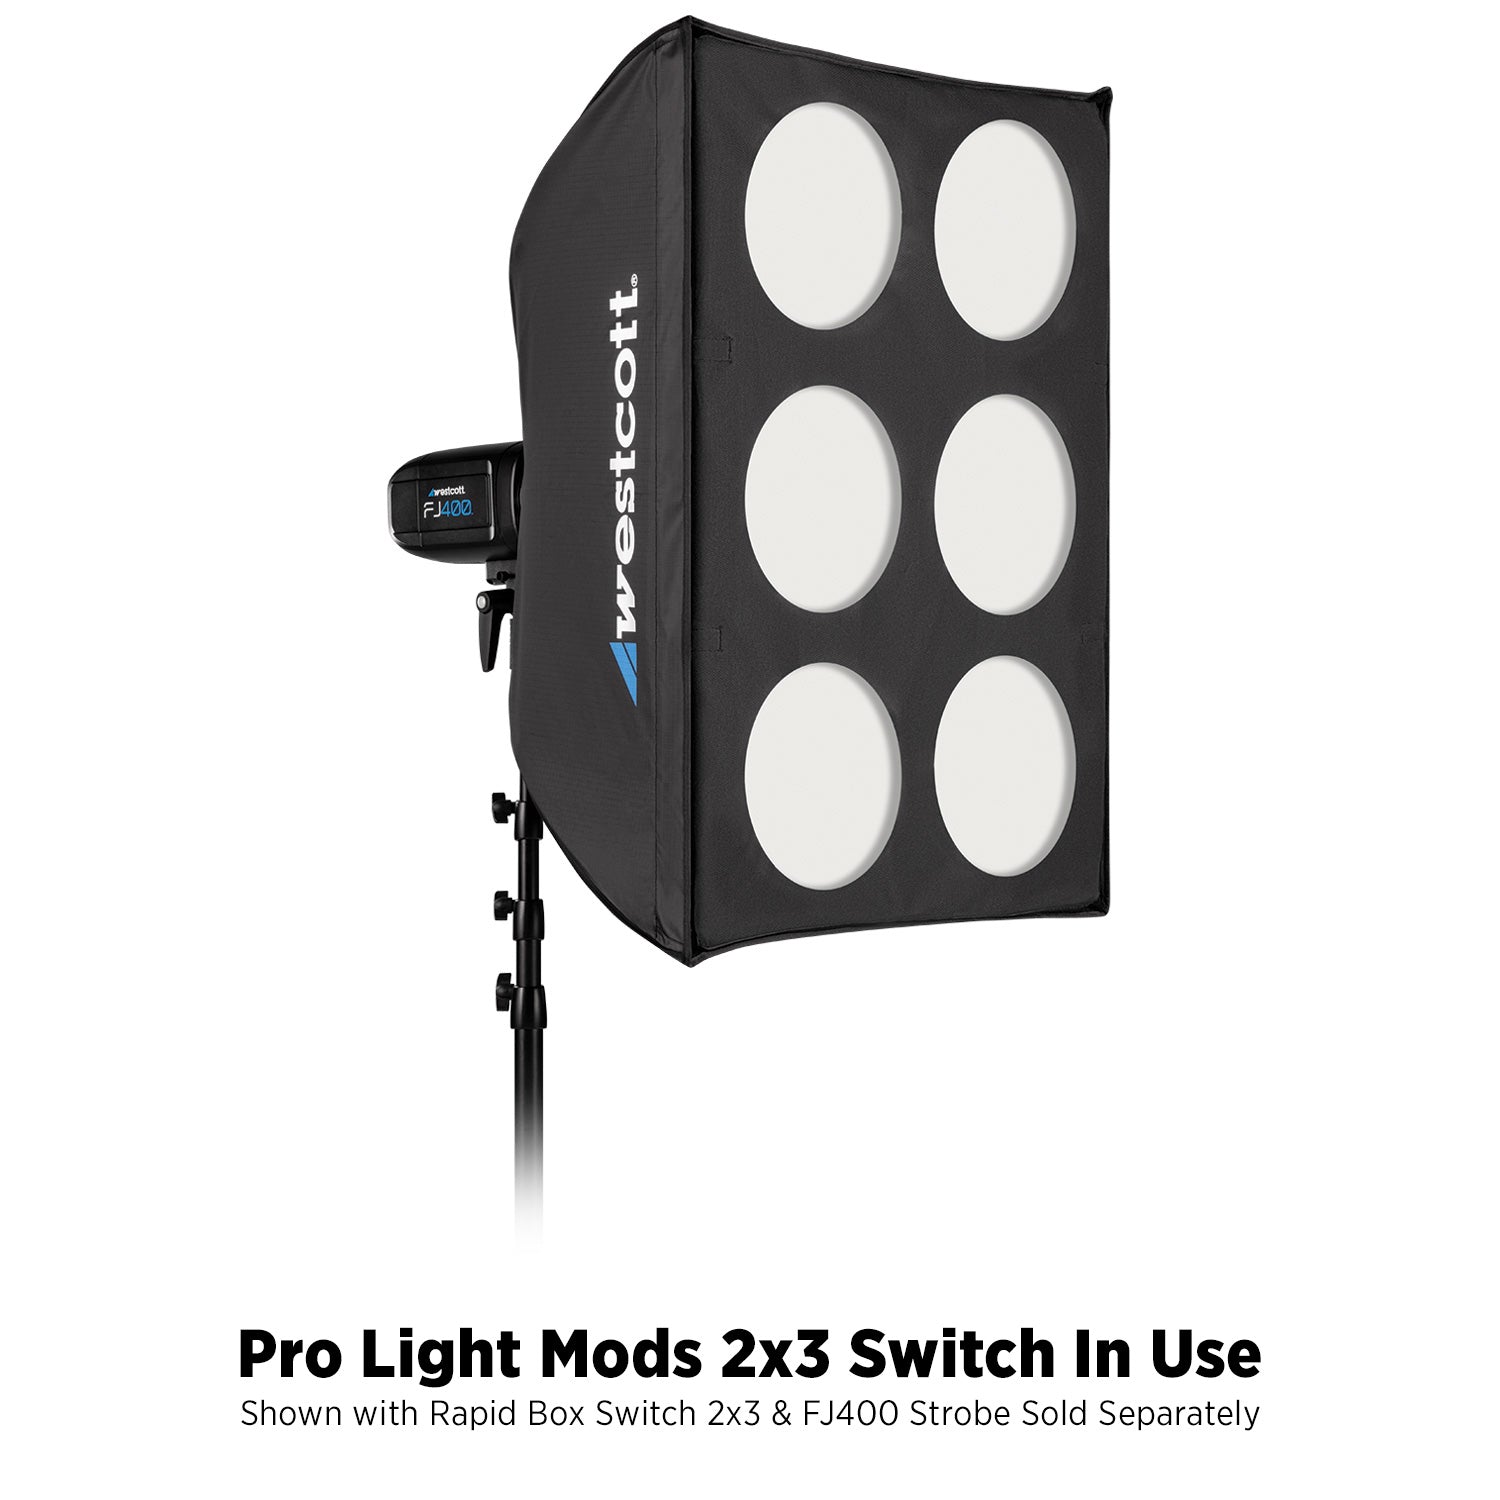 Pro Light Mods 2x3